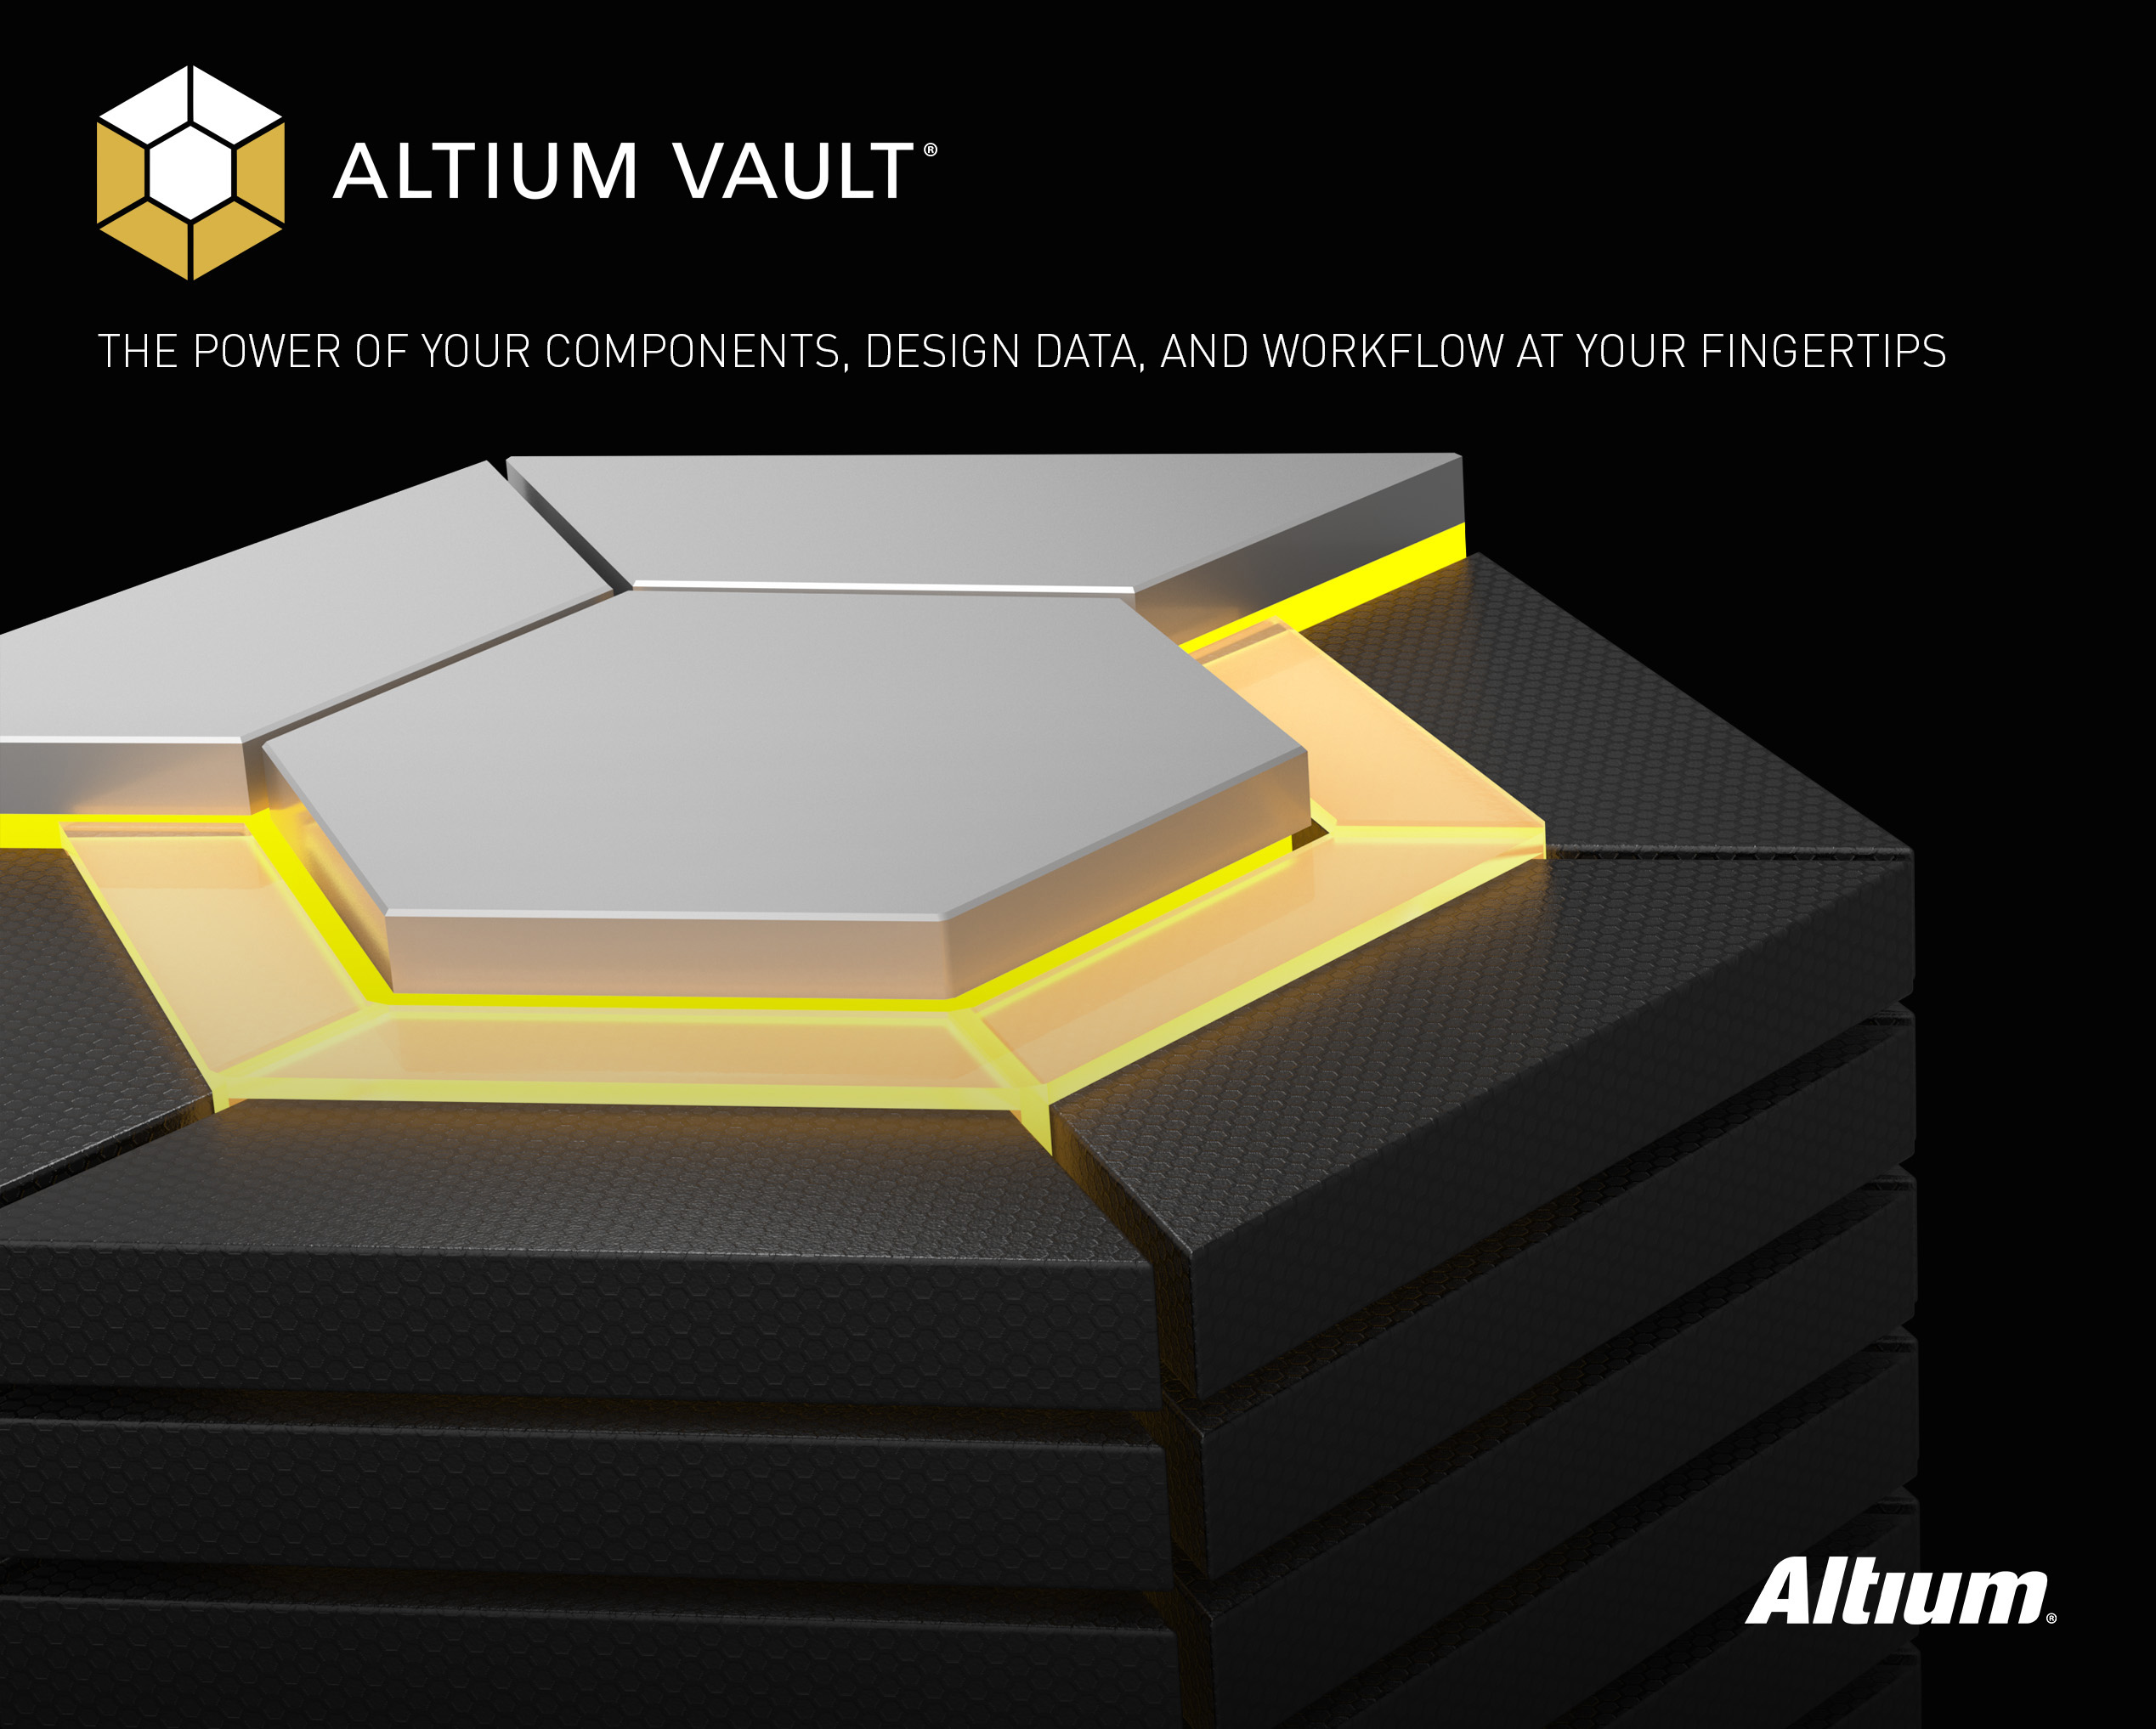 Downloadable Image for Altium Vault 2.1 Release